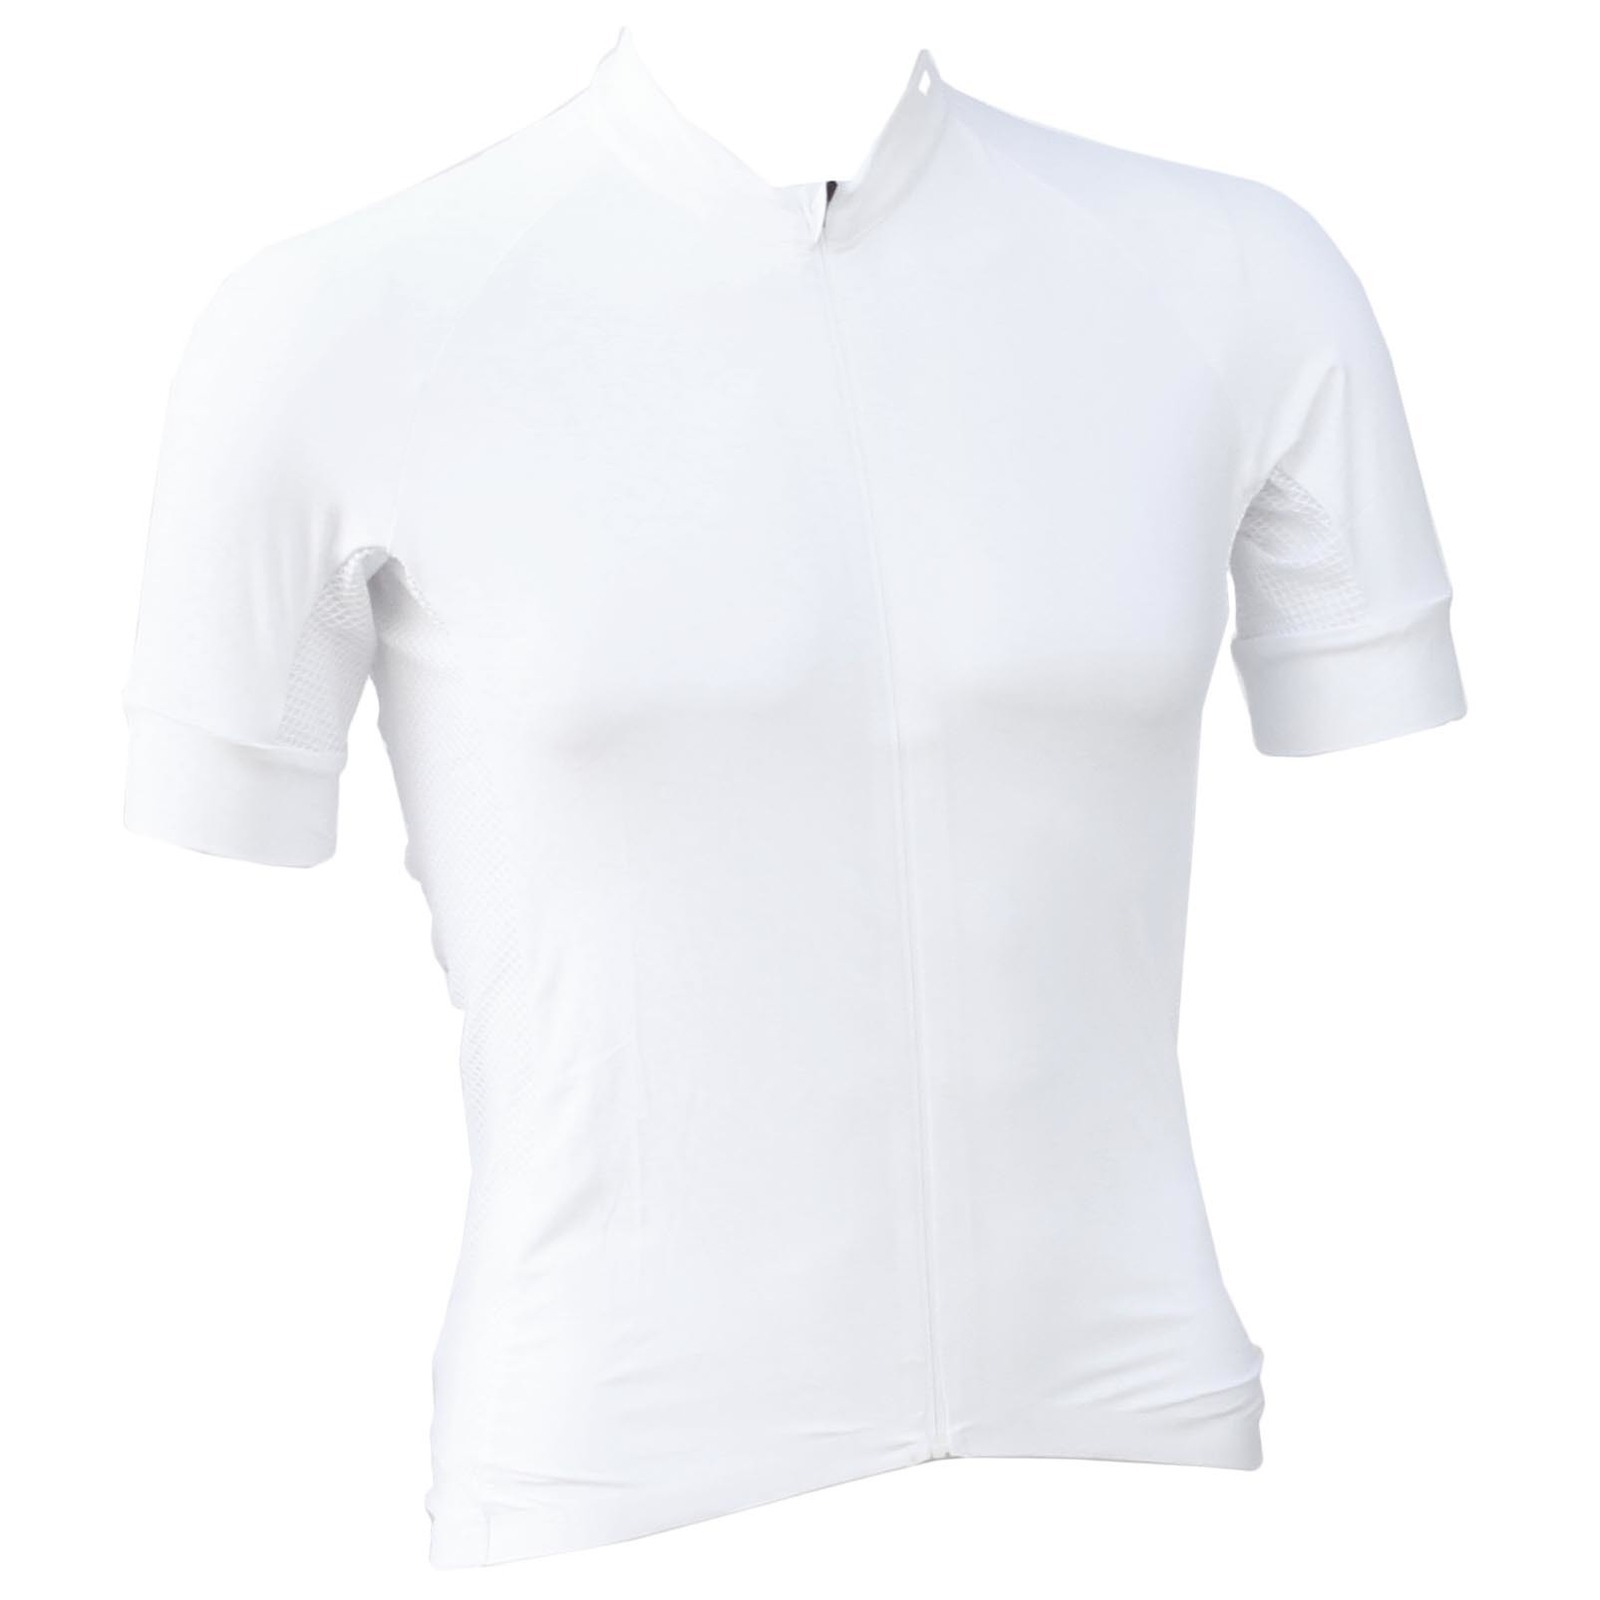 Jackbroad Premium Quality Cycling Short Sleeves White XL